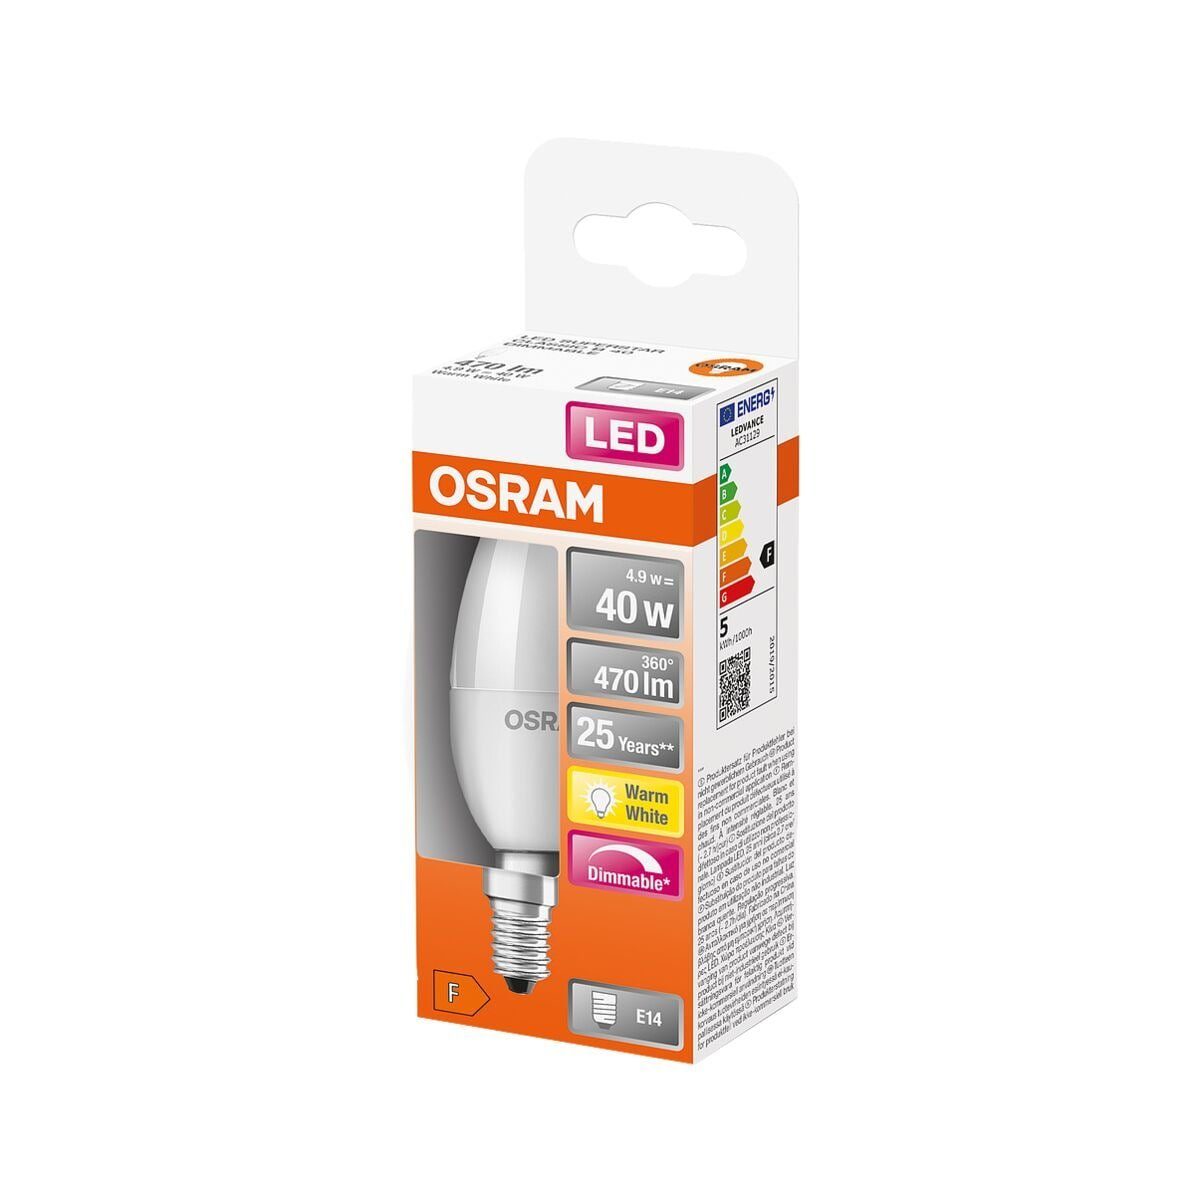 Osram LED-Leuchtmittel Superstar White, 5 W B E14, Classic Warm dimmbar